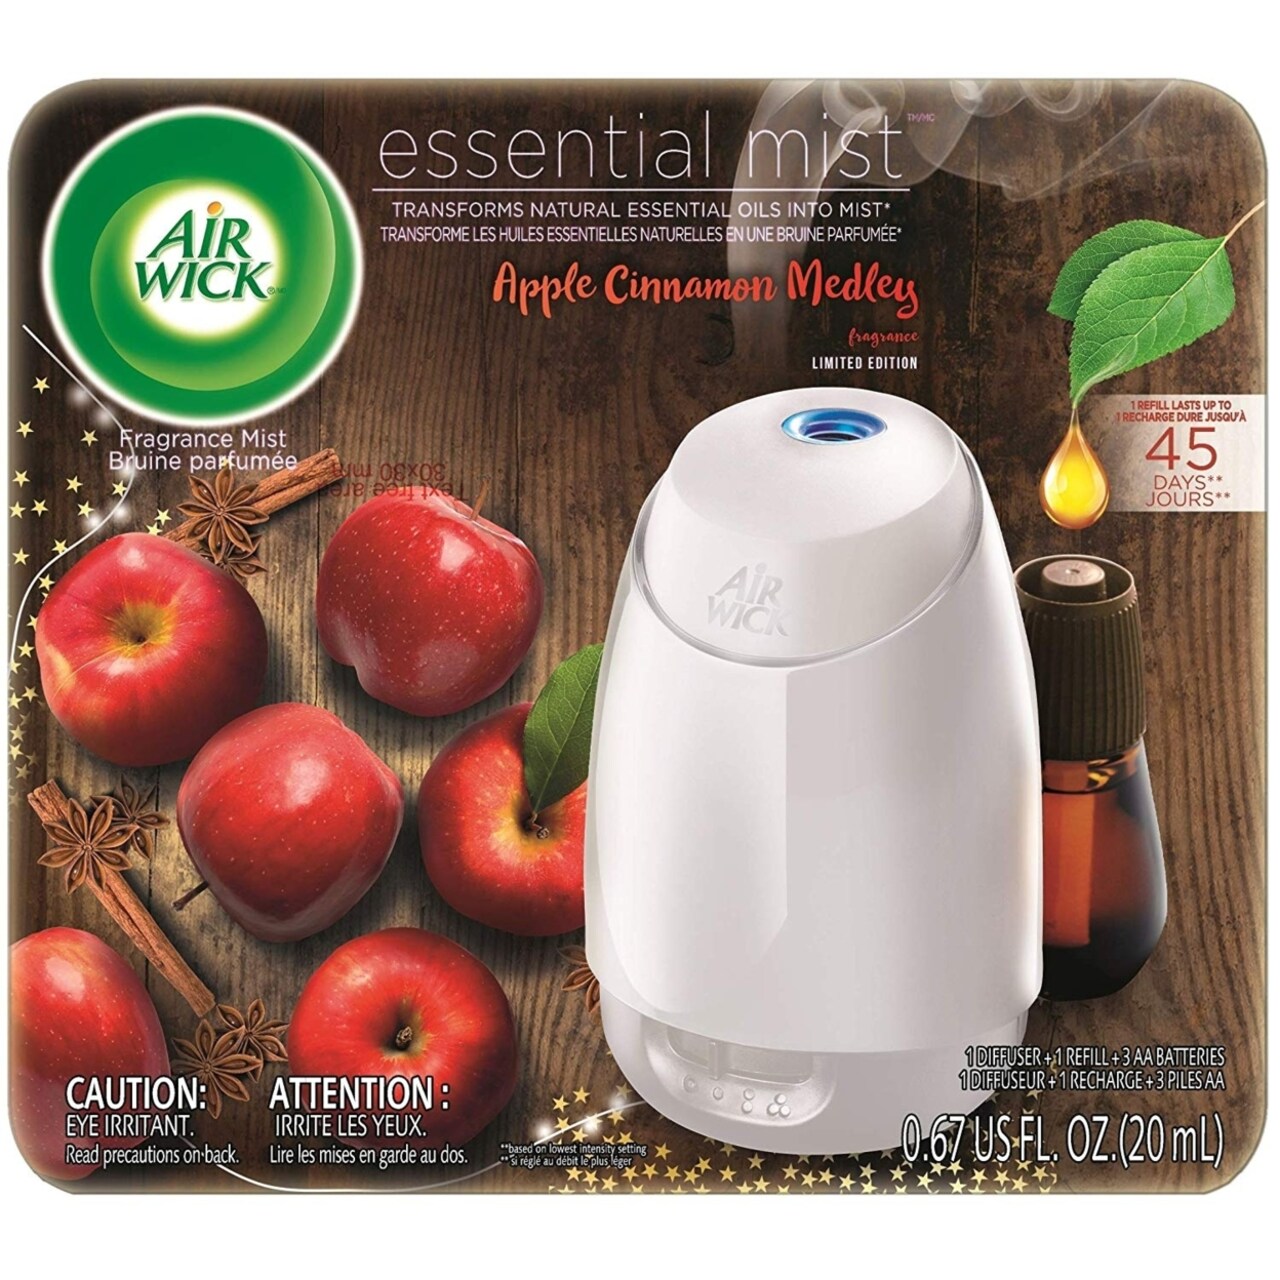 Air Wick Essential Mist, Essential Oil Diffuser, (Diffuser + 1 Refill), Apple  Cinnamon Medley, Fall decor, Air Freshener